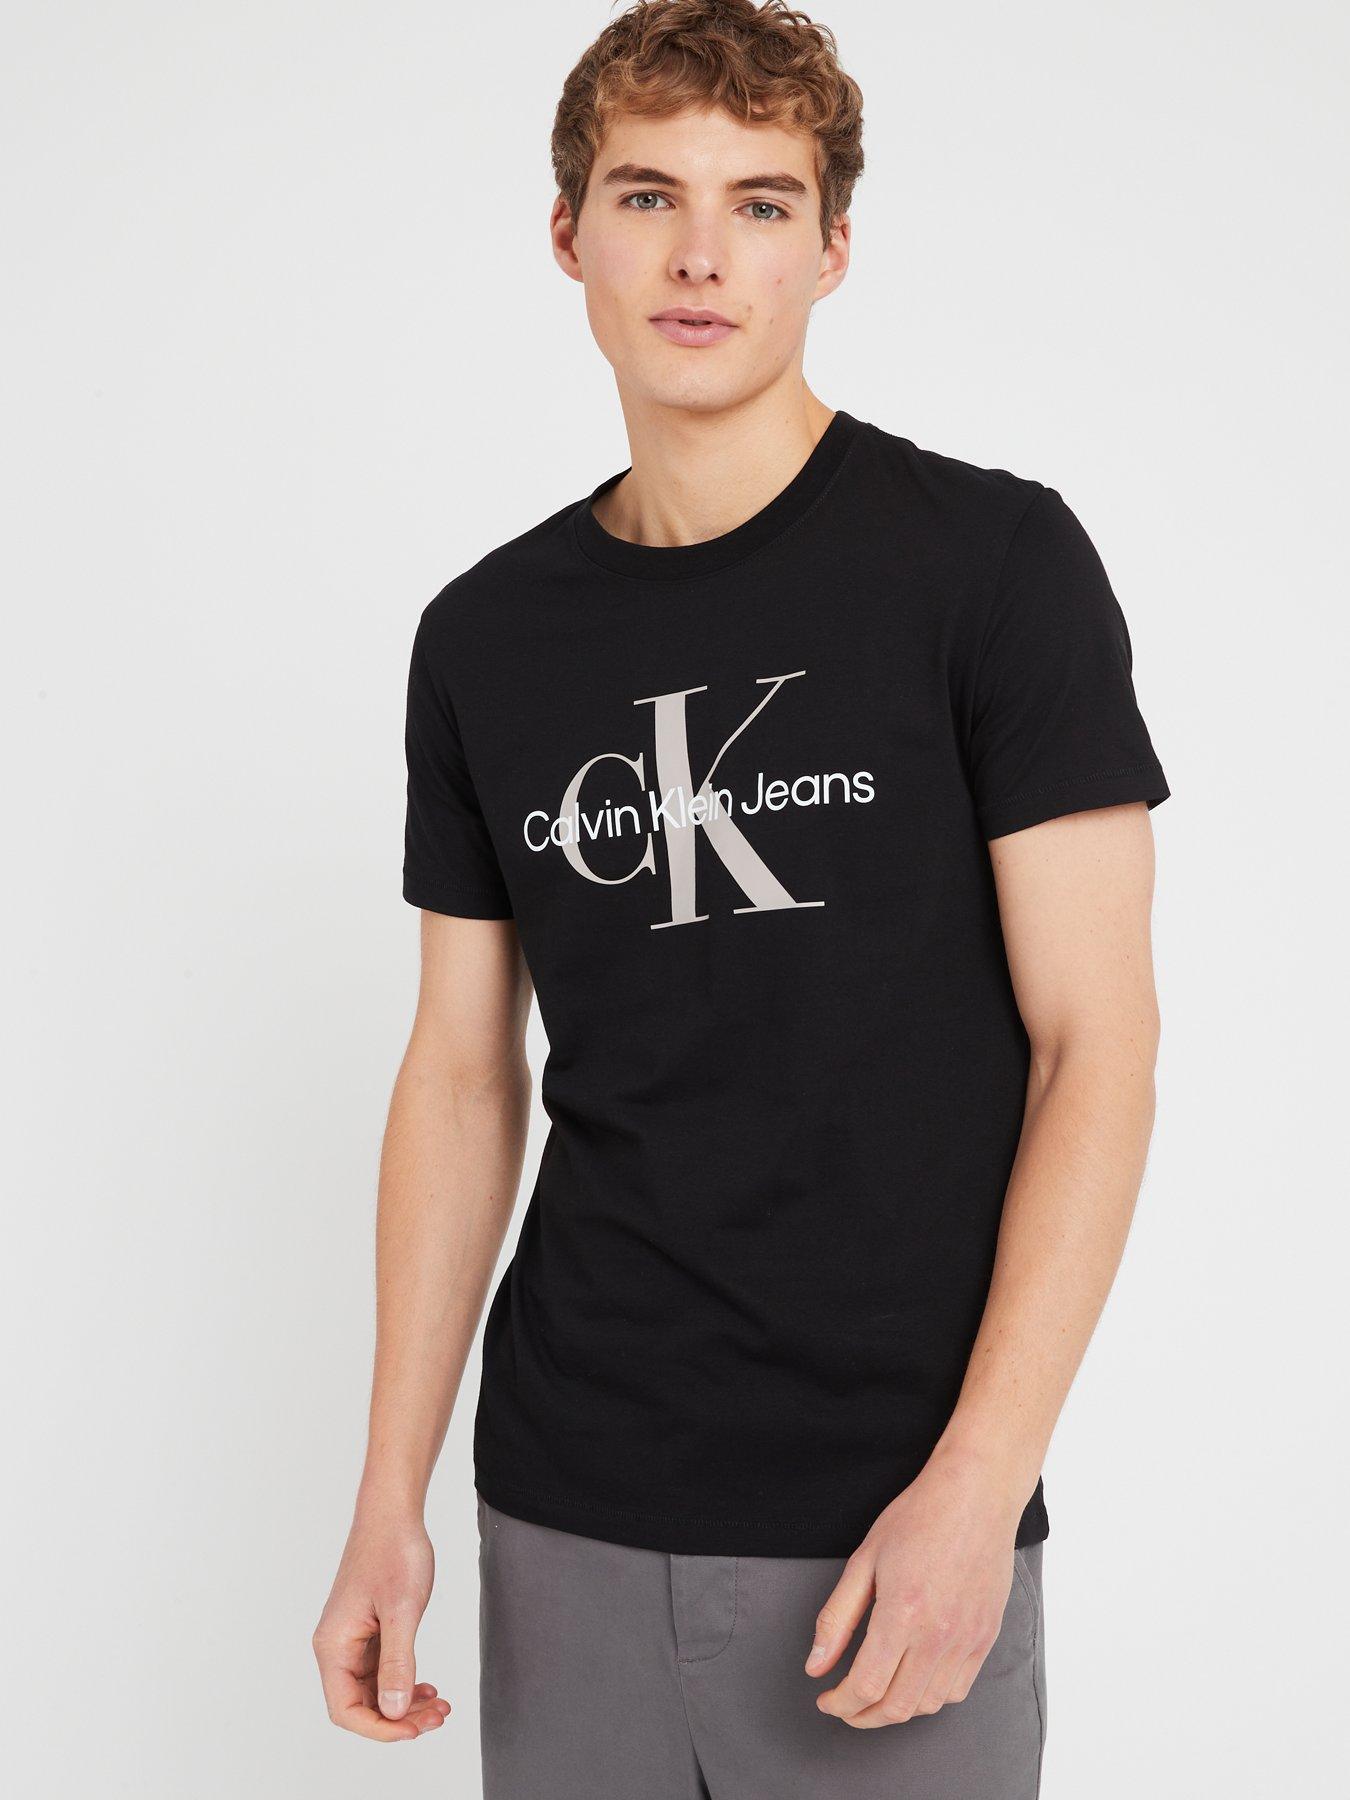 Black | Calvin klein | T-shirts & polos | Men | Very Ireland